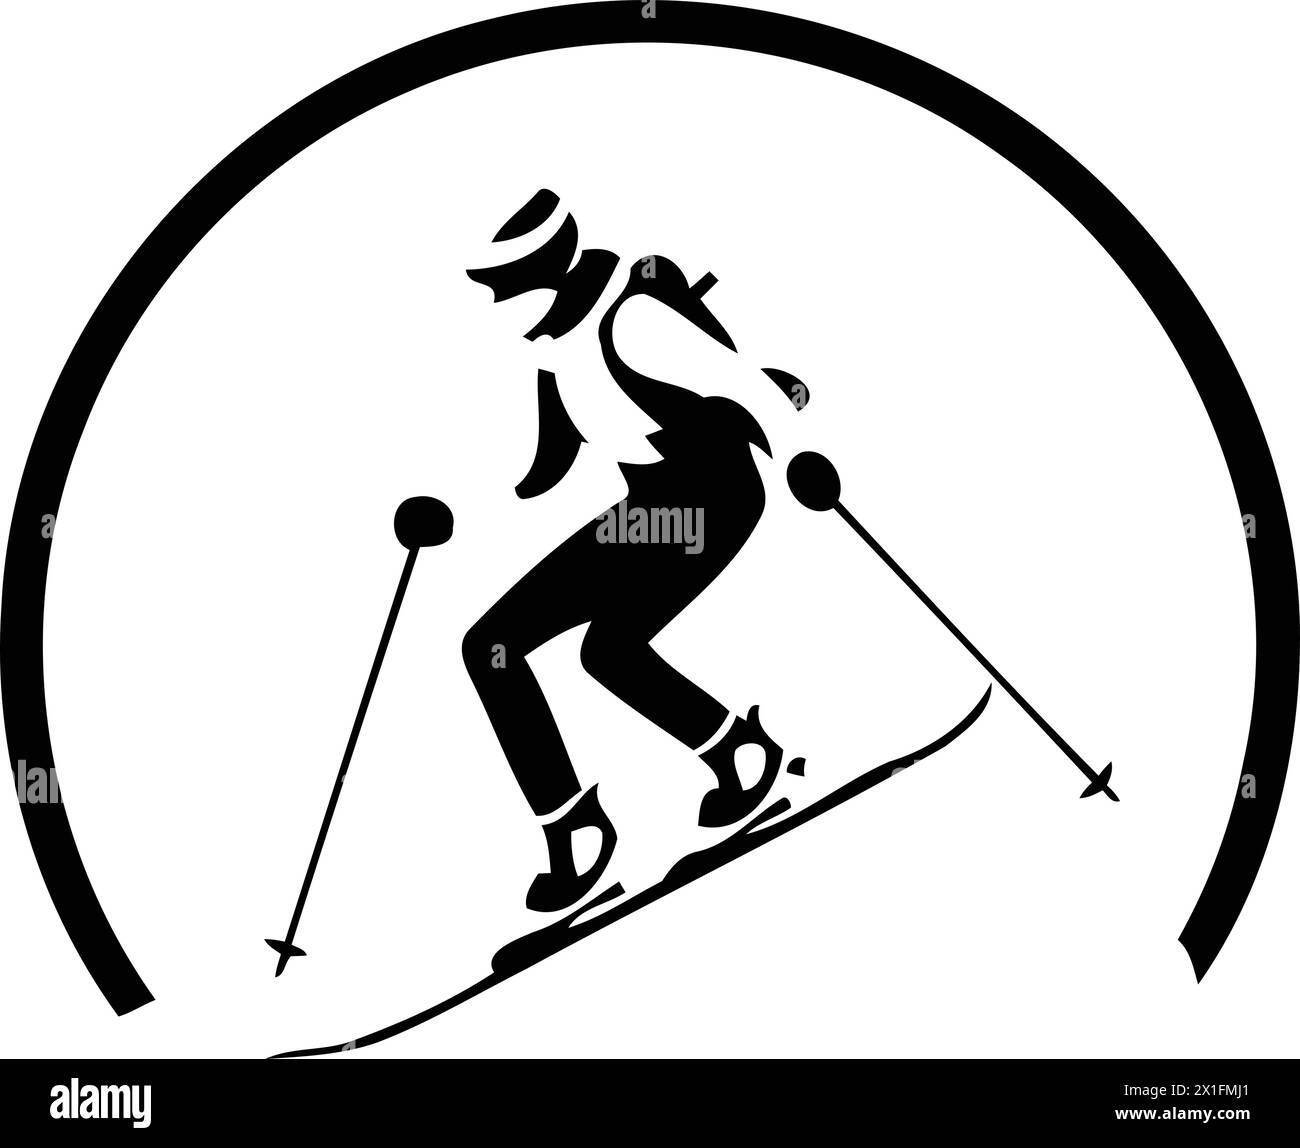 Skier-Vektor-Logo. Flache Illustration eines Skifahrers auf der Skipiste. Stock Vektor